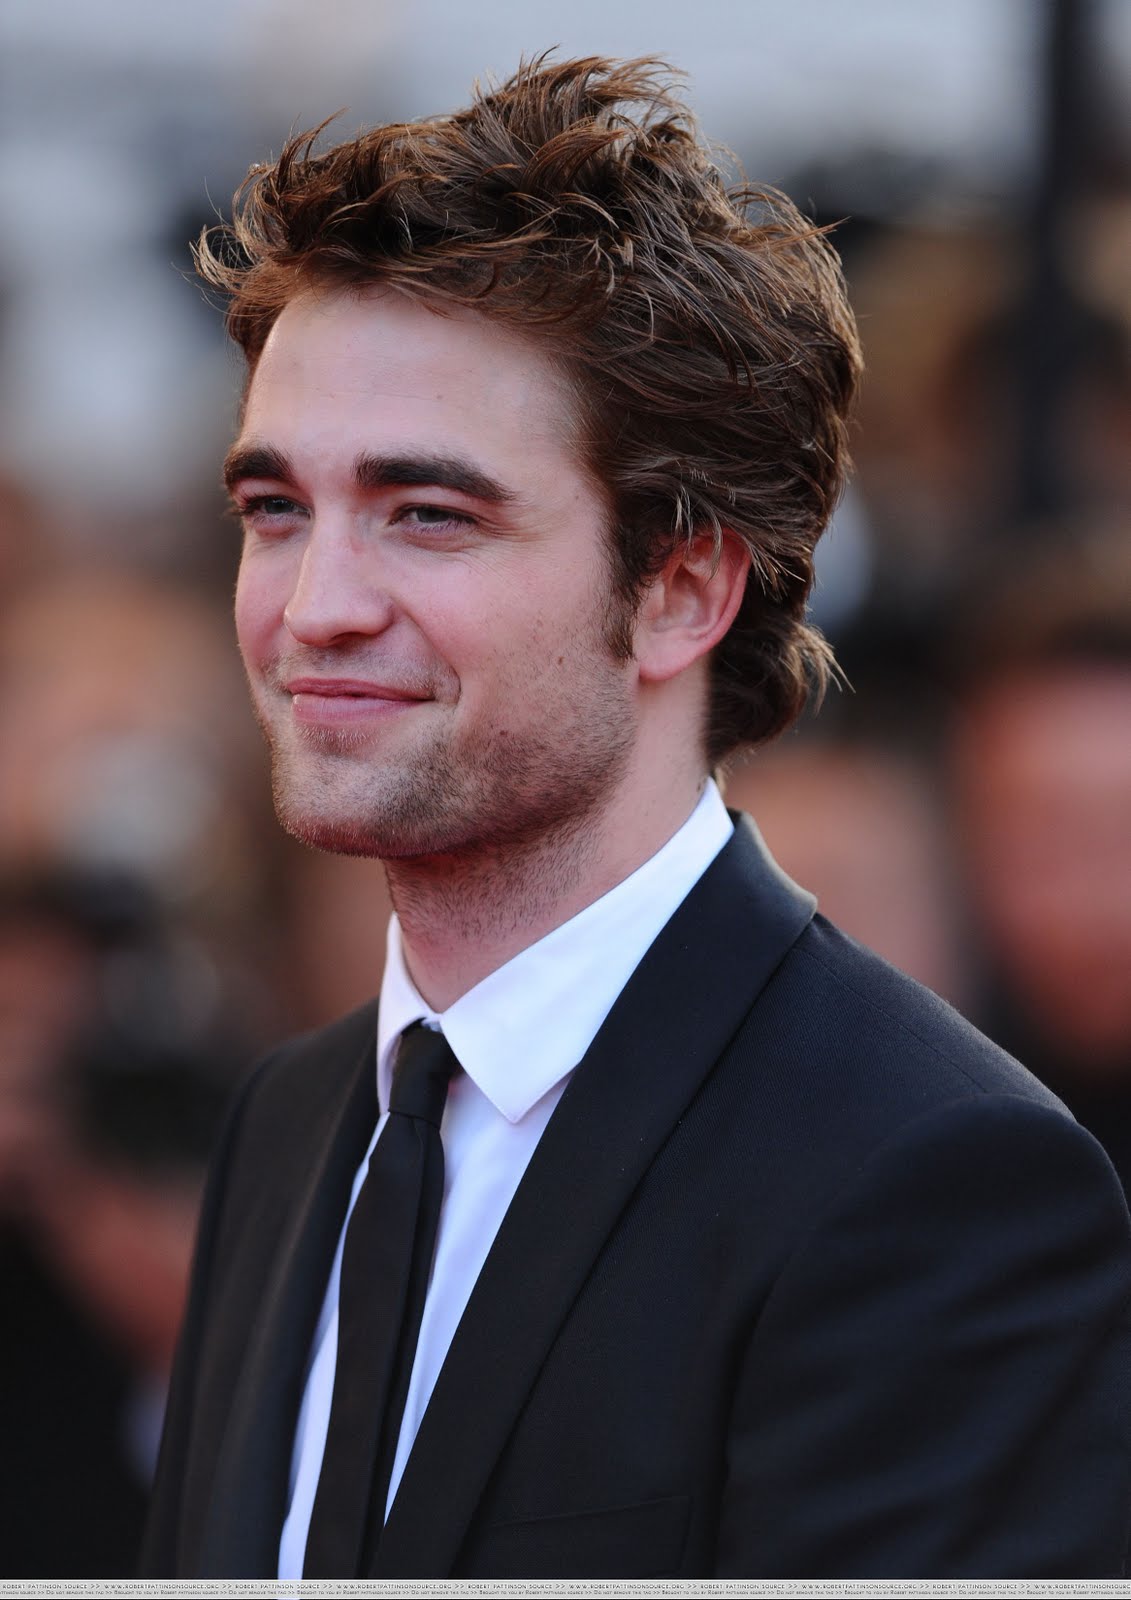 Robert Pattinson News: Robert Pattinson Mingling With The Elite: Makes Rich List 2010